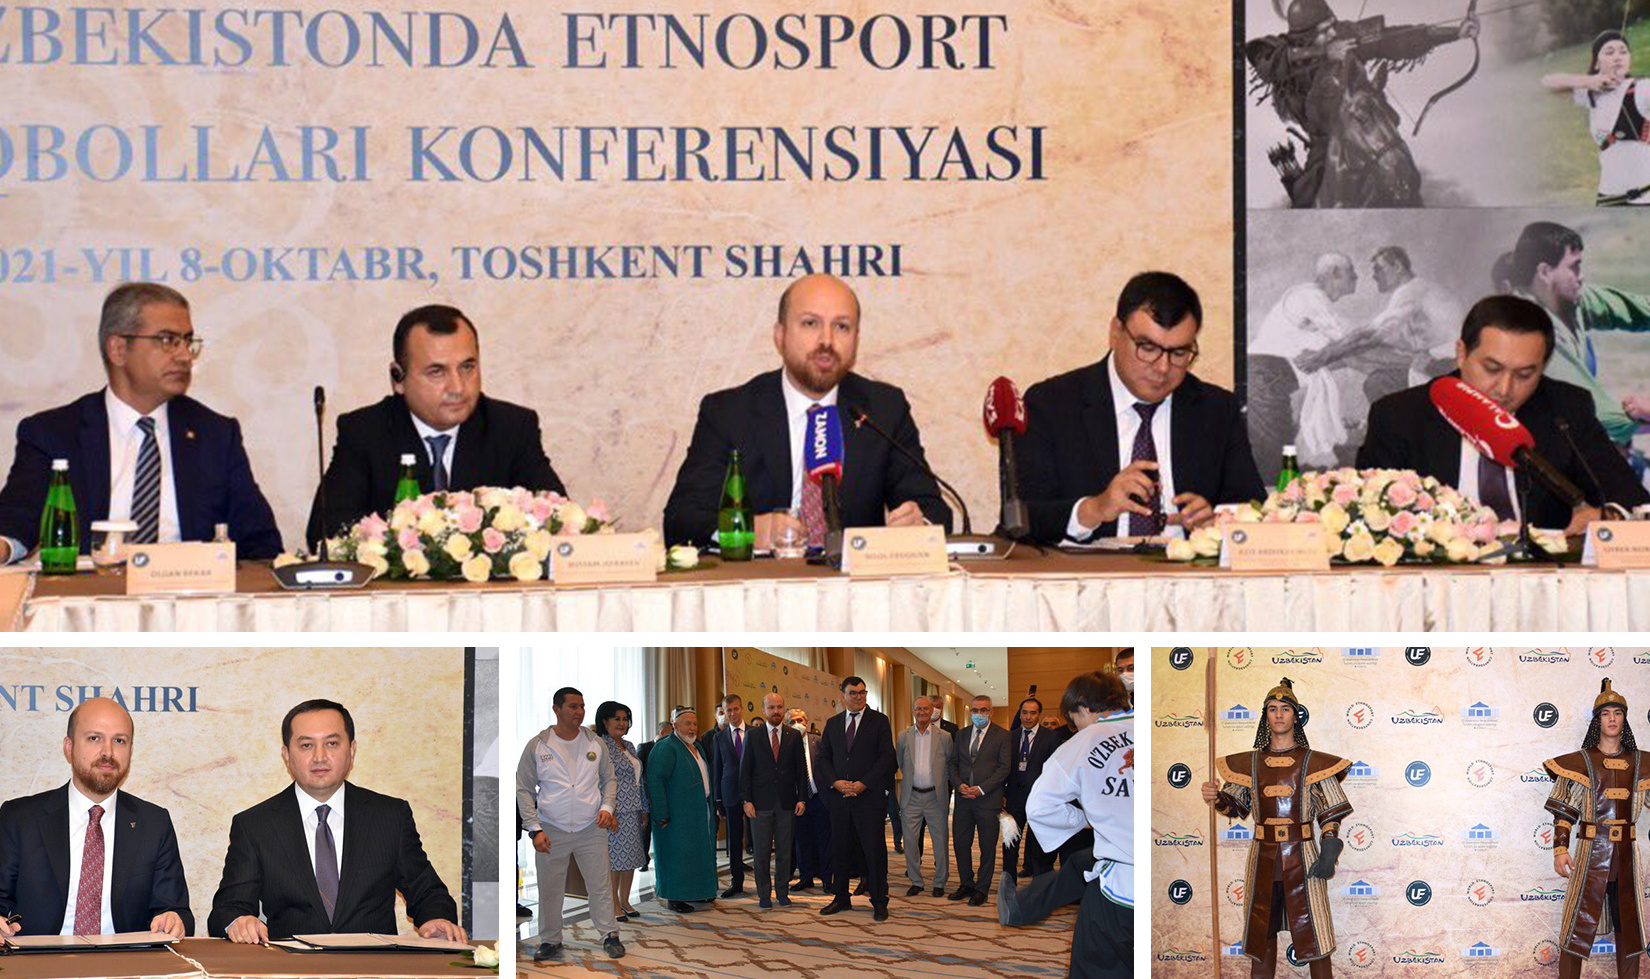 World Ethnosport Confederation President Necmeddin Bilal Erdoğan attended the opening of the Ethnosport Association of Uzbekistan.